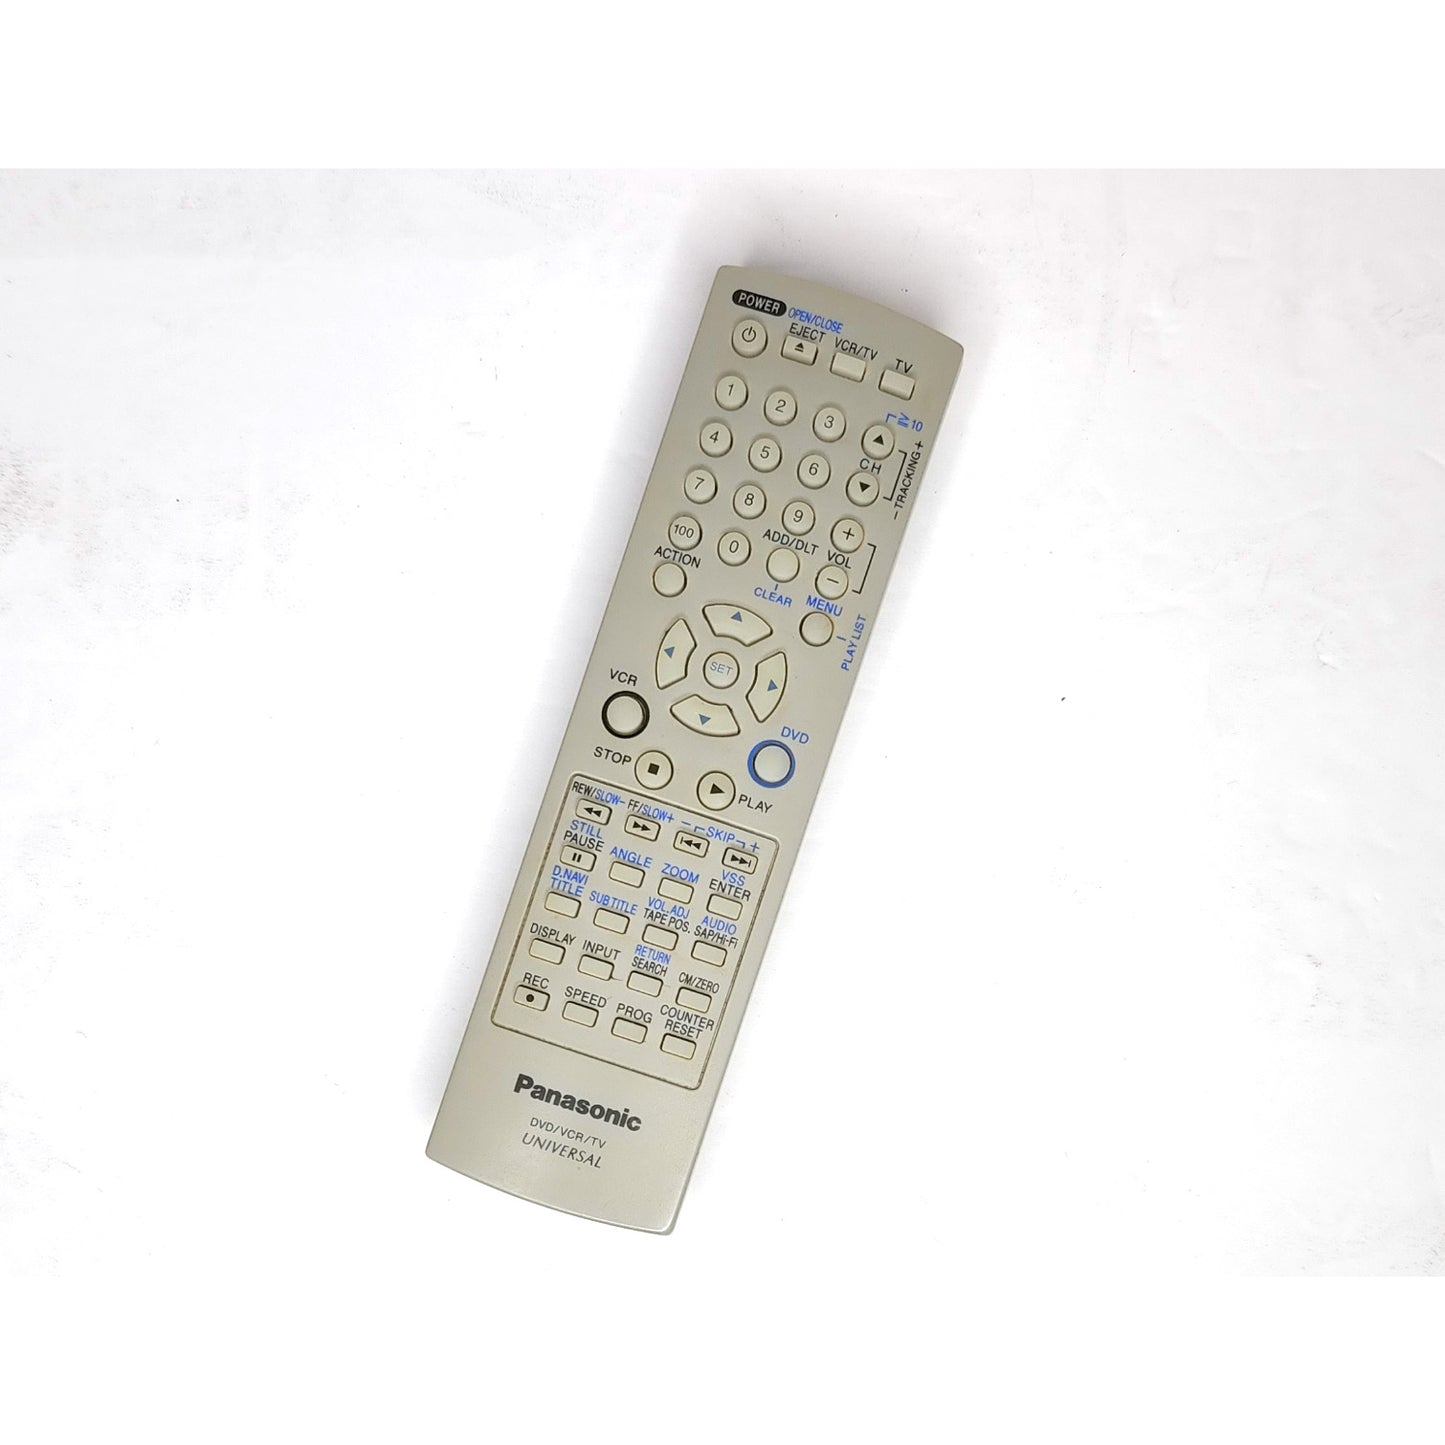 Panasonic PV-D4735S Omnivision VCR/DVD Player Combo - Remote Control